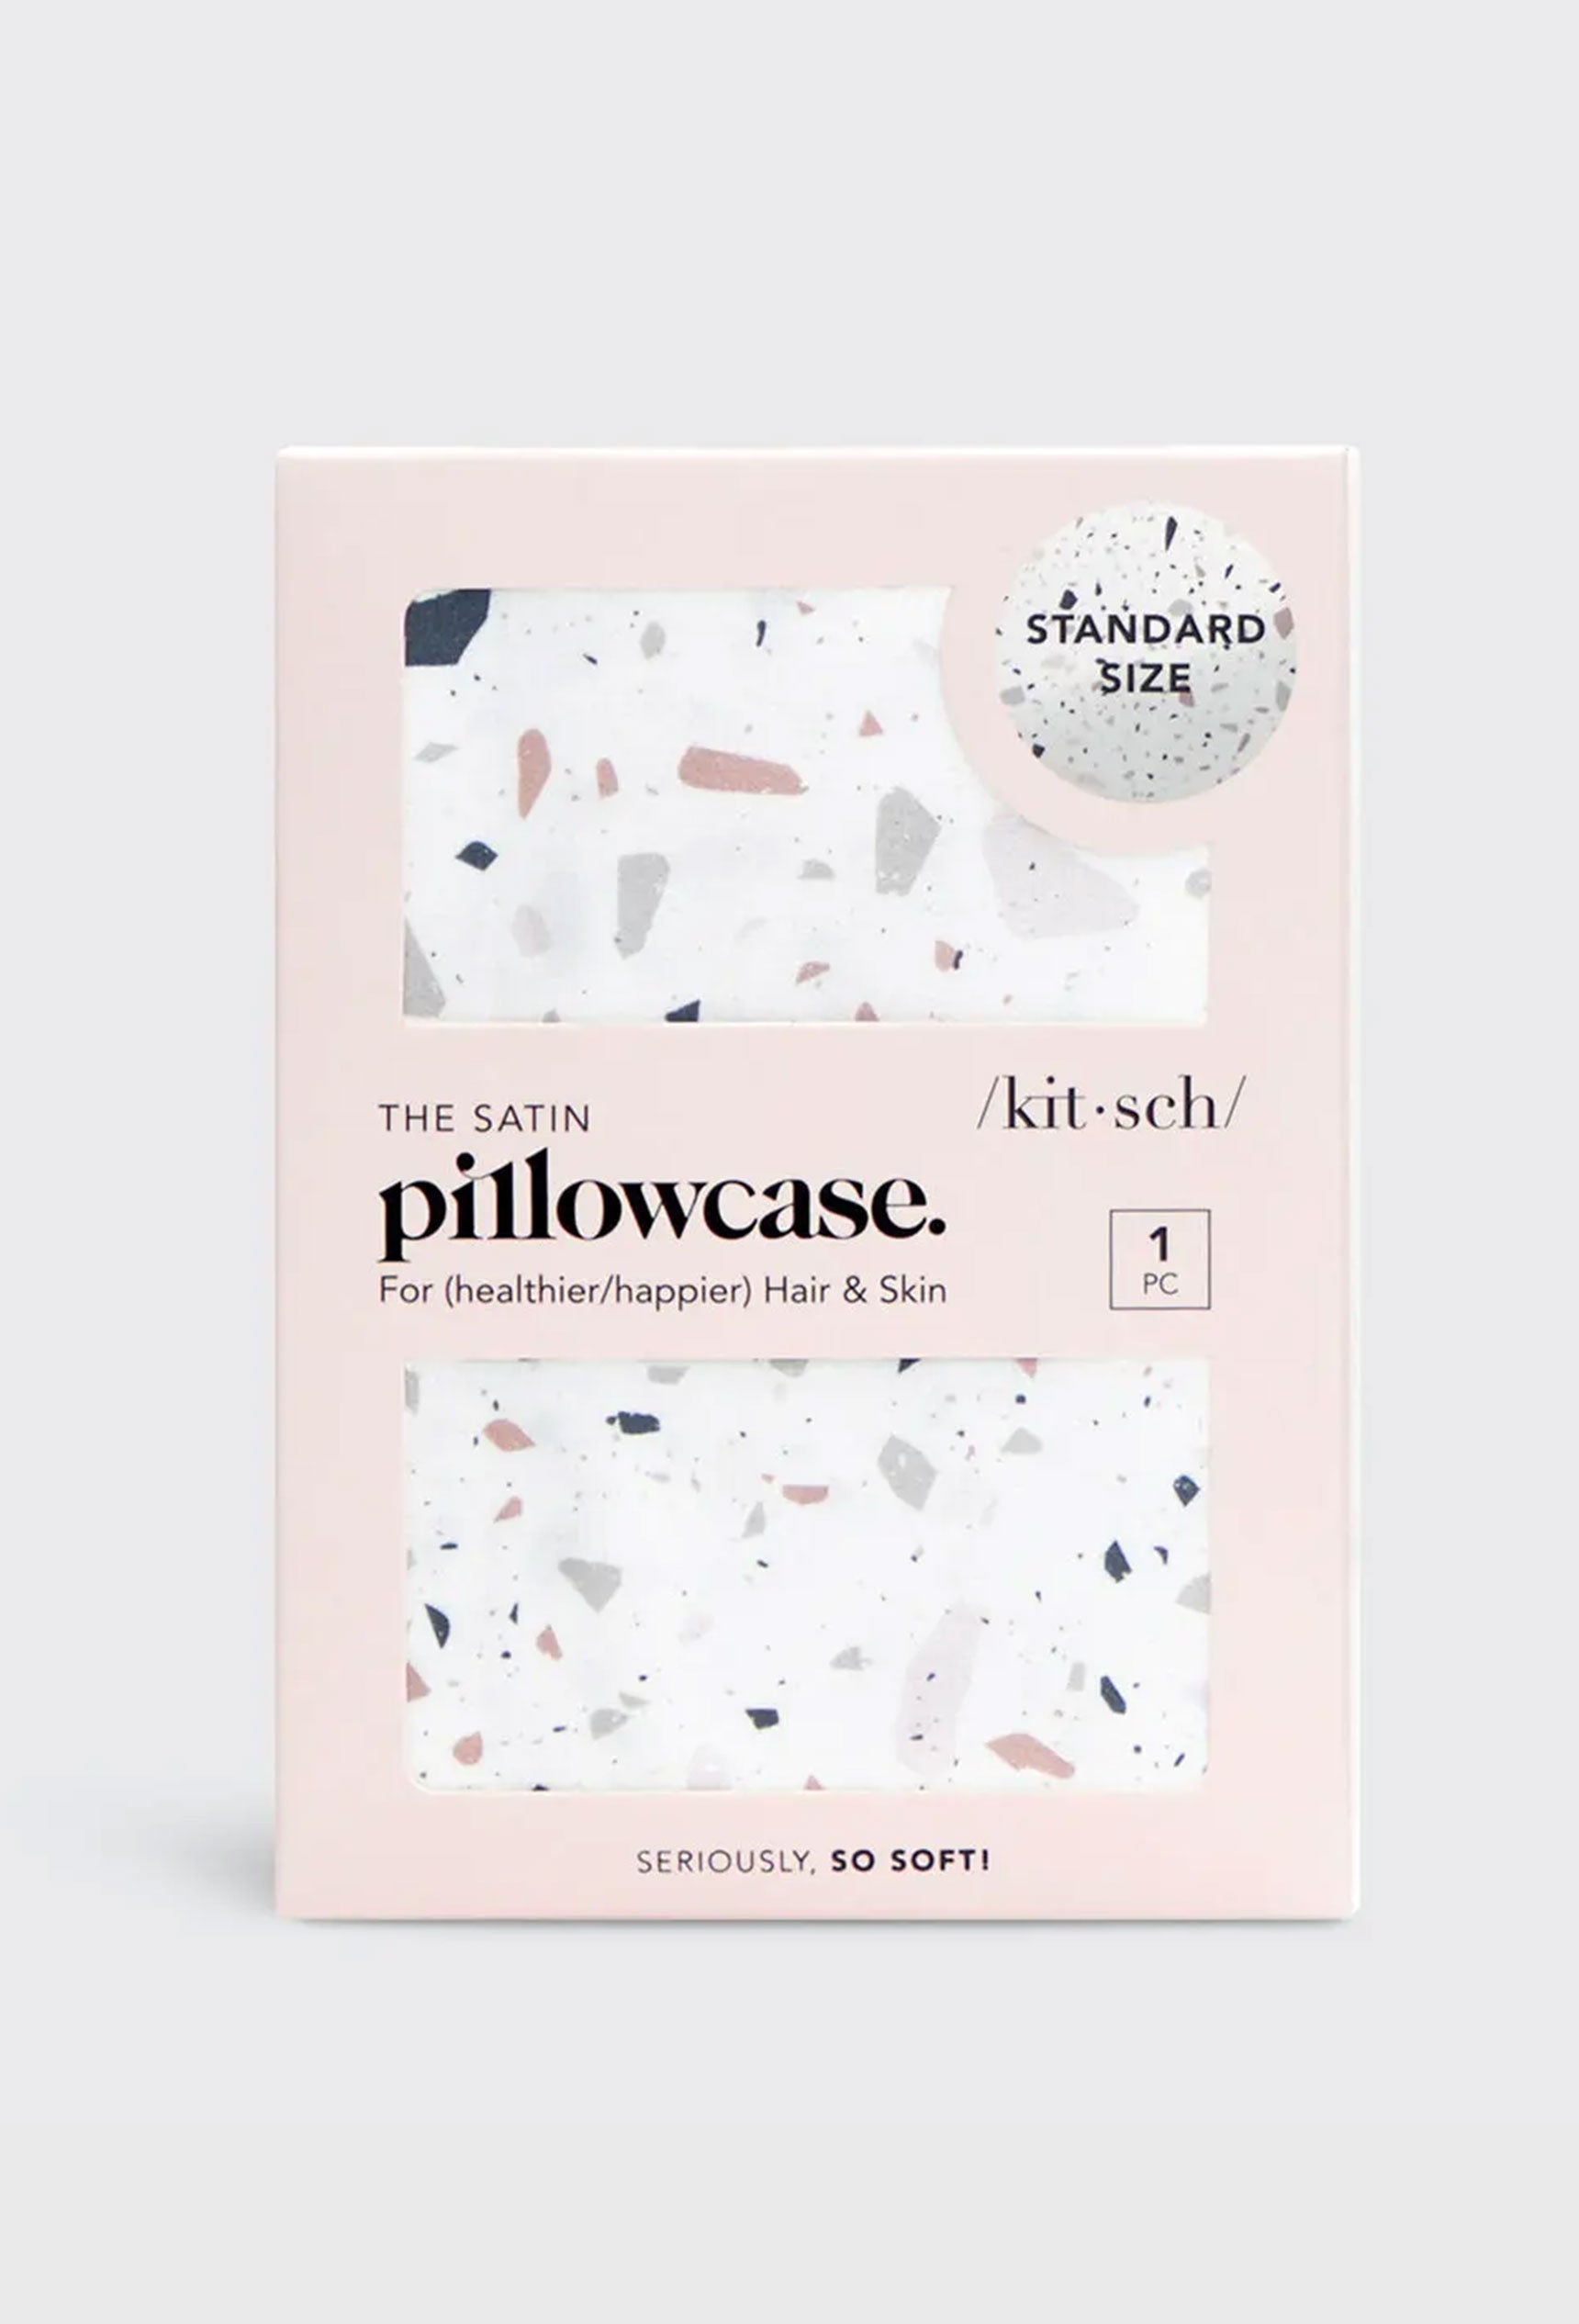 Kitsch Satin Pillowcase in Terrazzo, satin pilowcase, geometric shapes all over pillow 